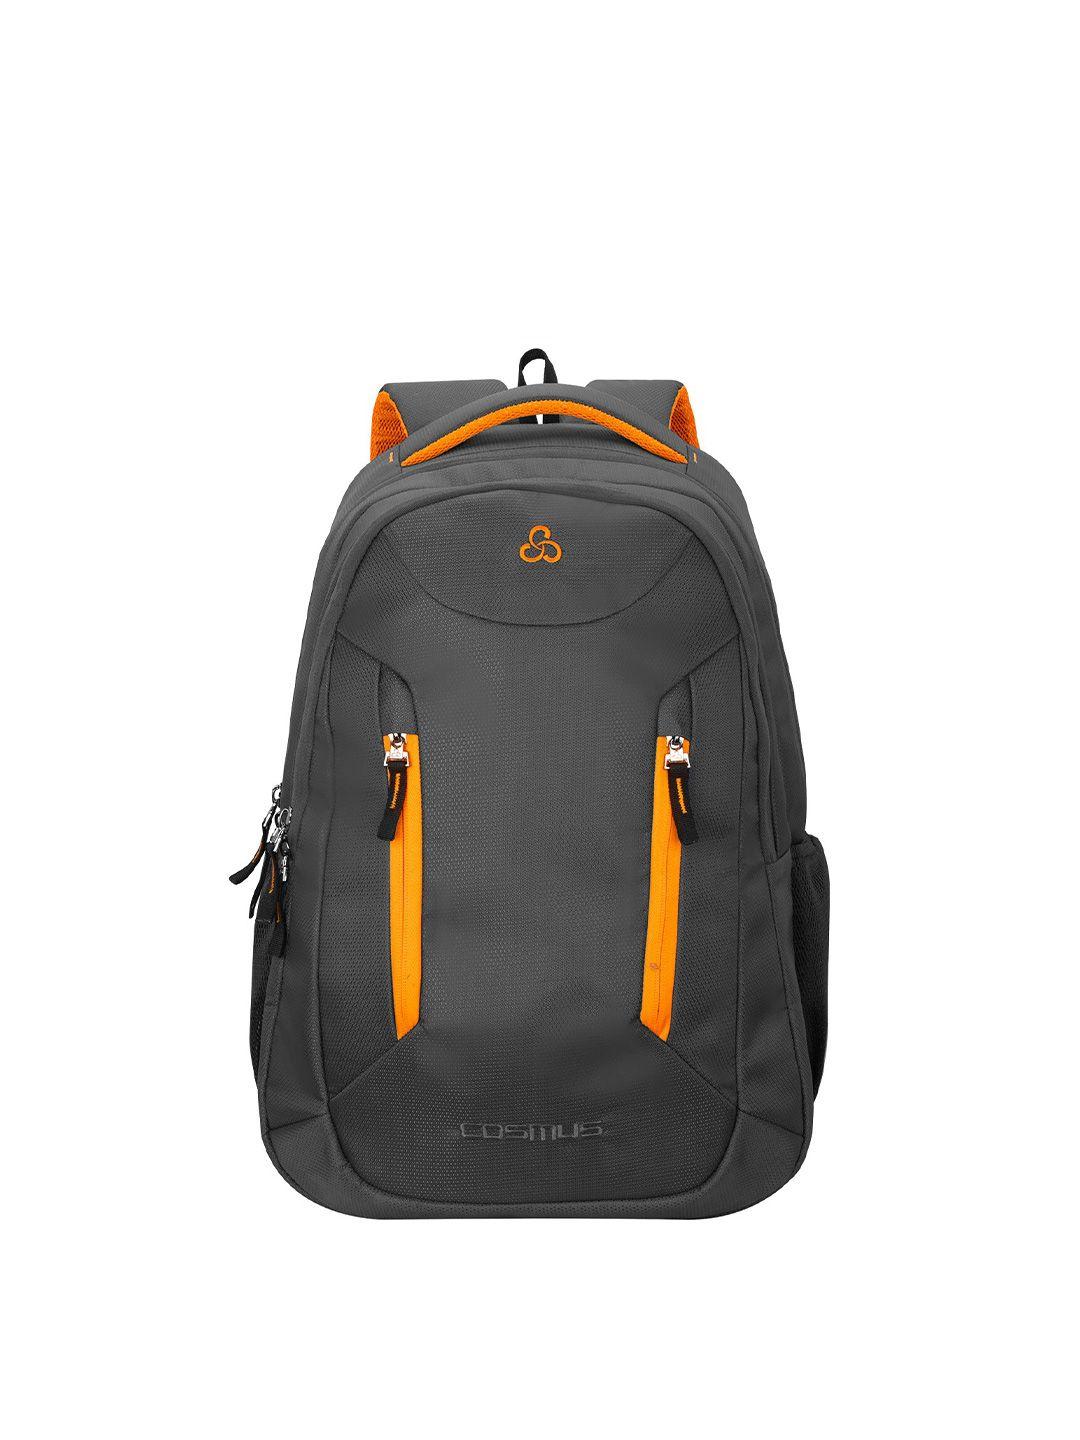 cosmus unisex grey & orange laptop bag